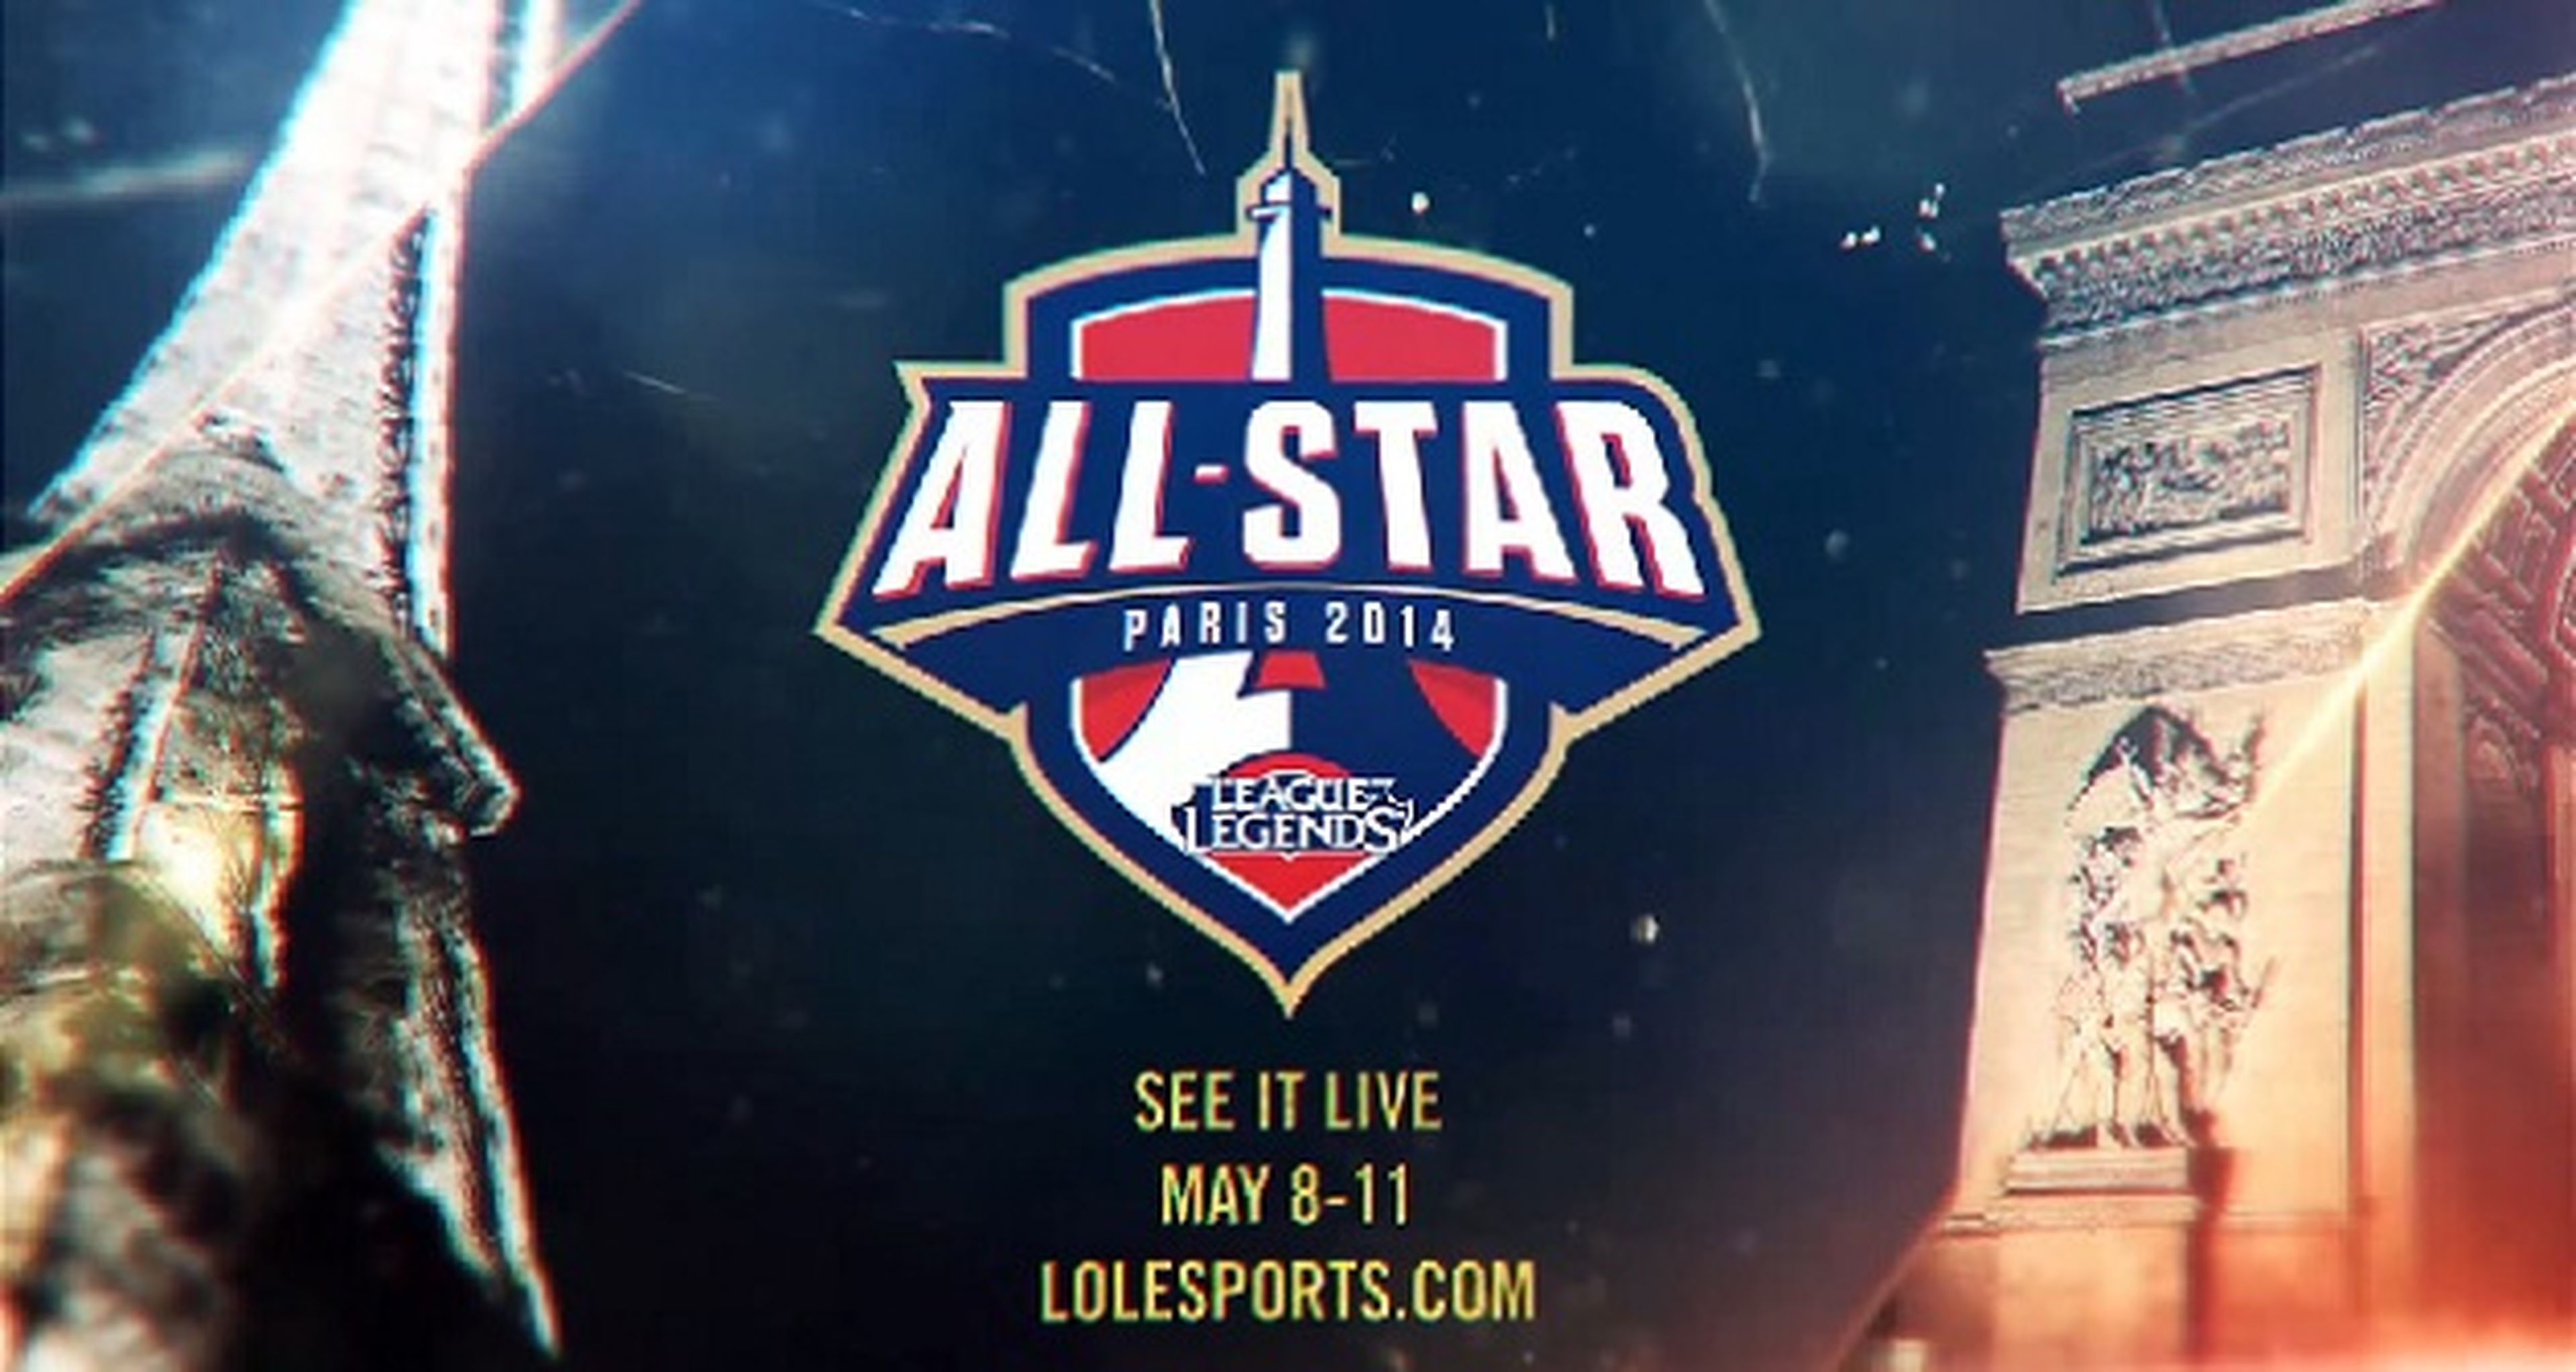 Todos los detalles del All Star de League of Legends